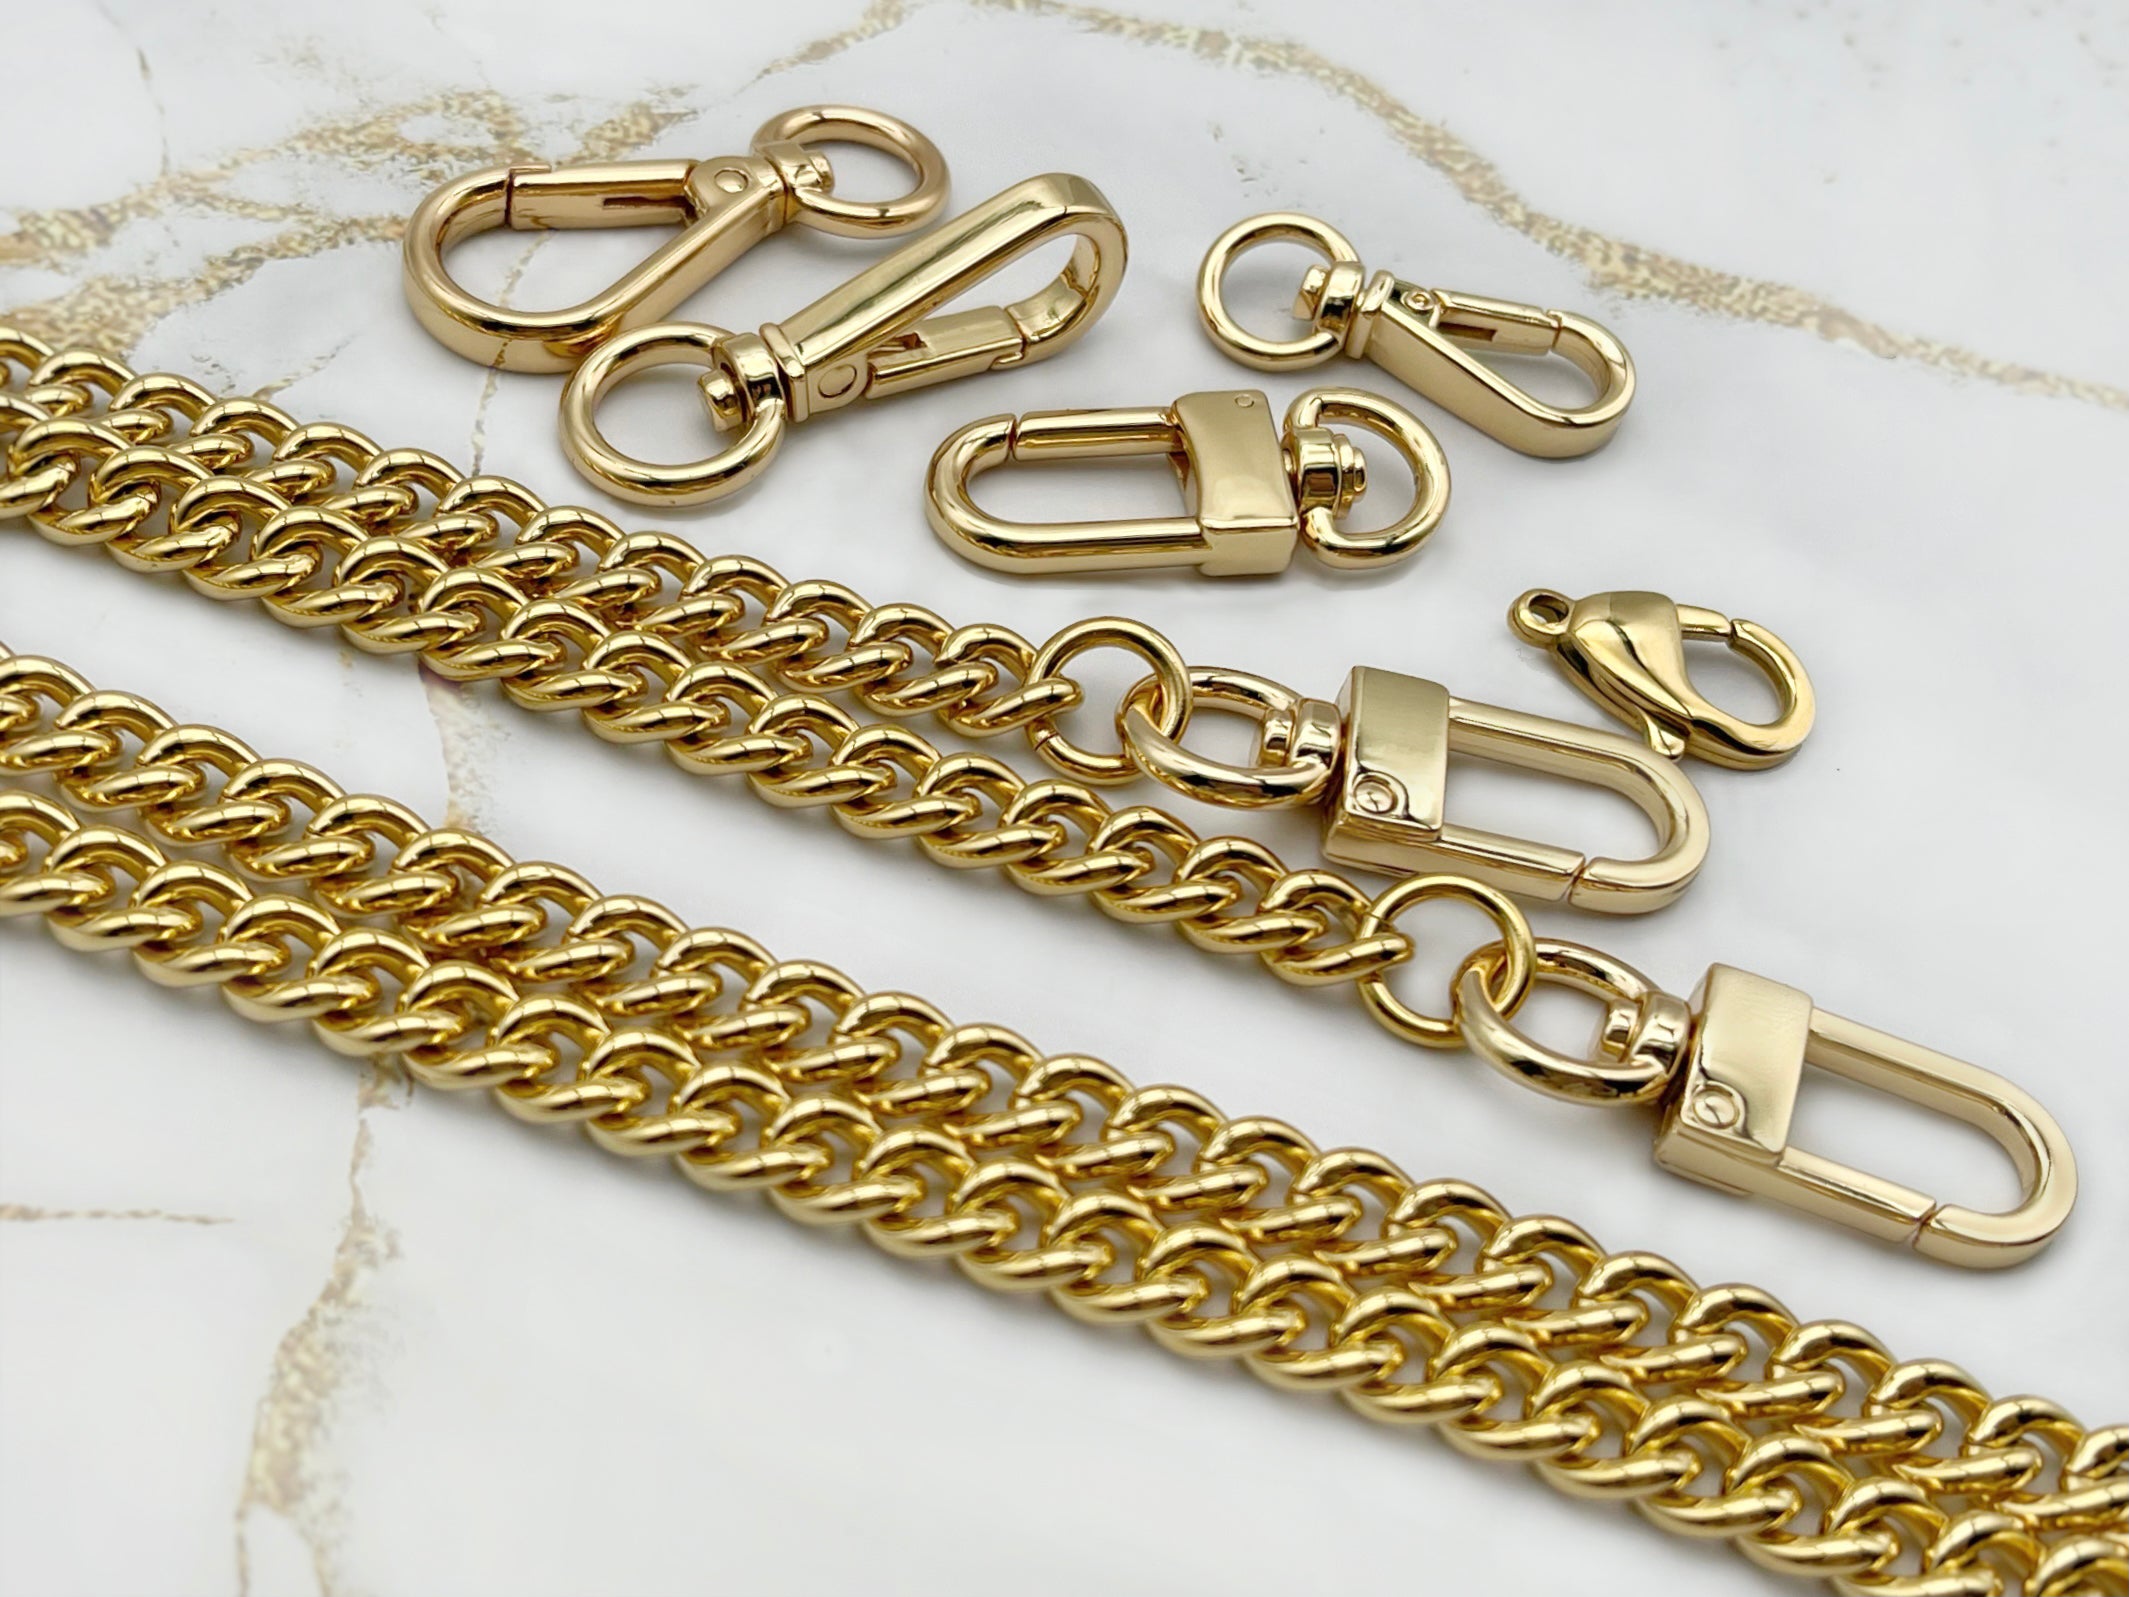 Gold Chain Straps, Replacement Purse Straps & Handbag Accessories -  Leather, Chain & more